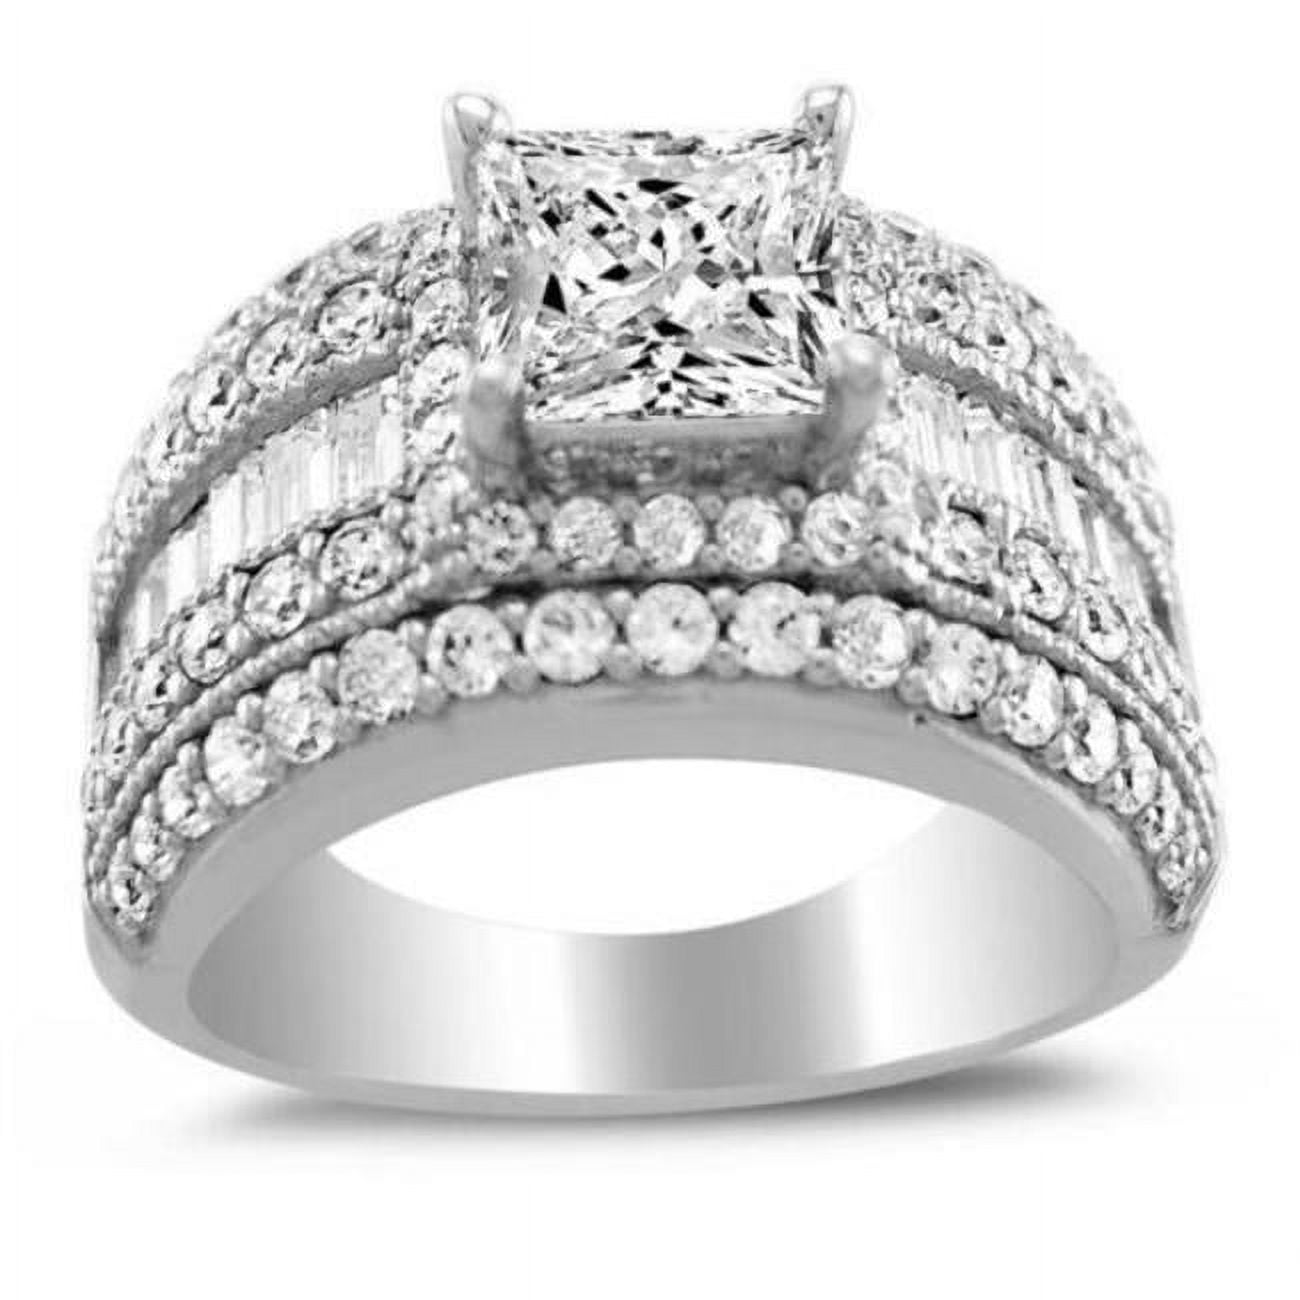 OS0065-RG-sz8.5 14K White Gold 2.5CT TGW Princess-cut Diamonette Engagement Ring, Size 8.5 -  Precious Stars, OS0065-RG_sz8.5